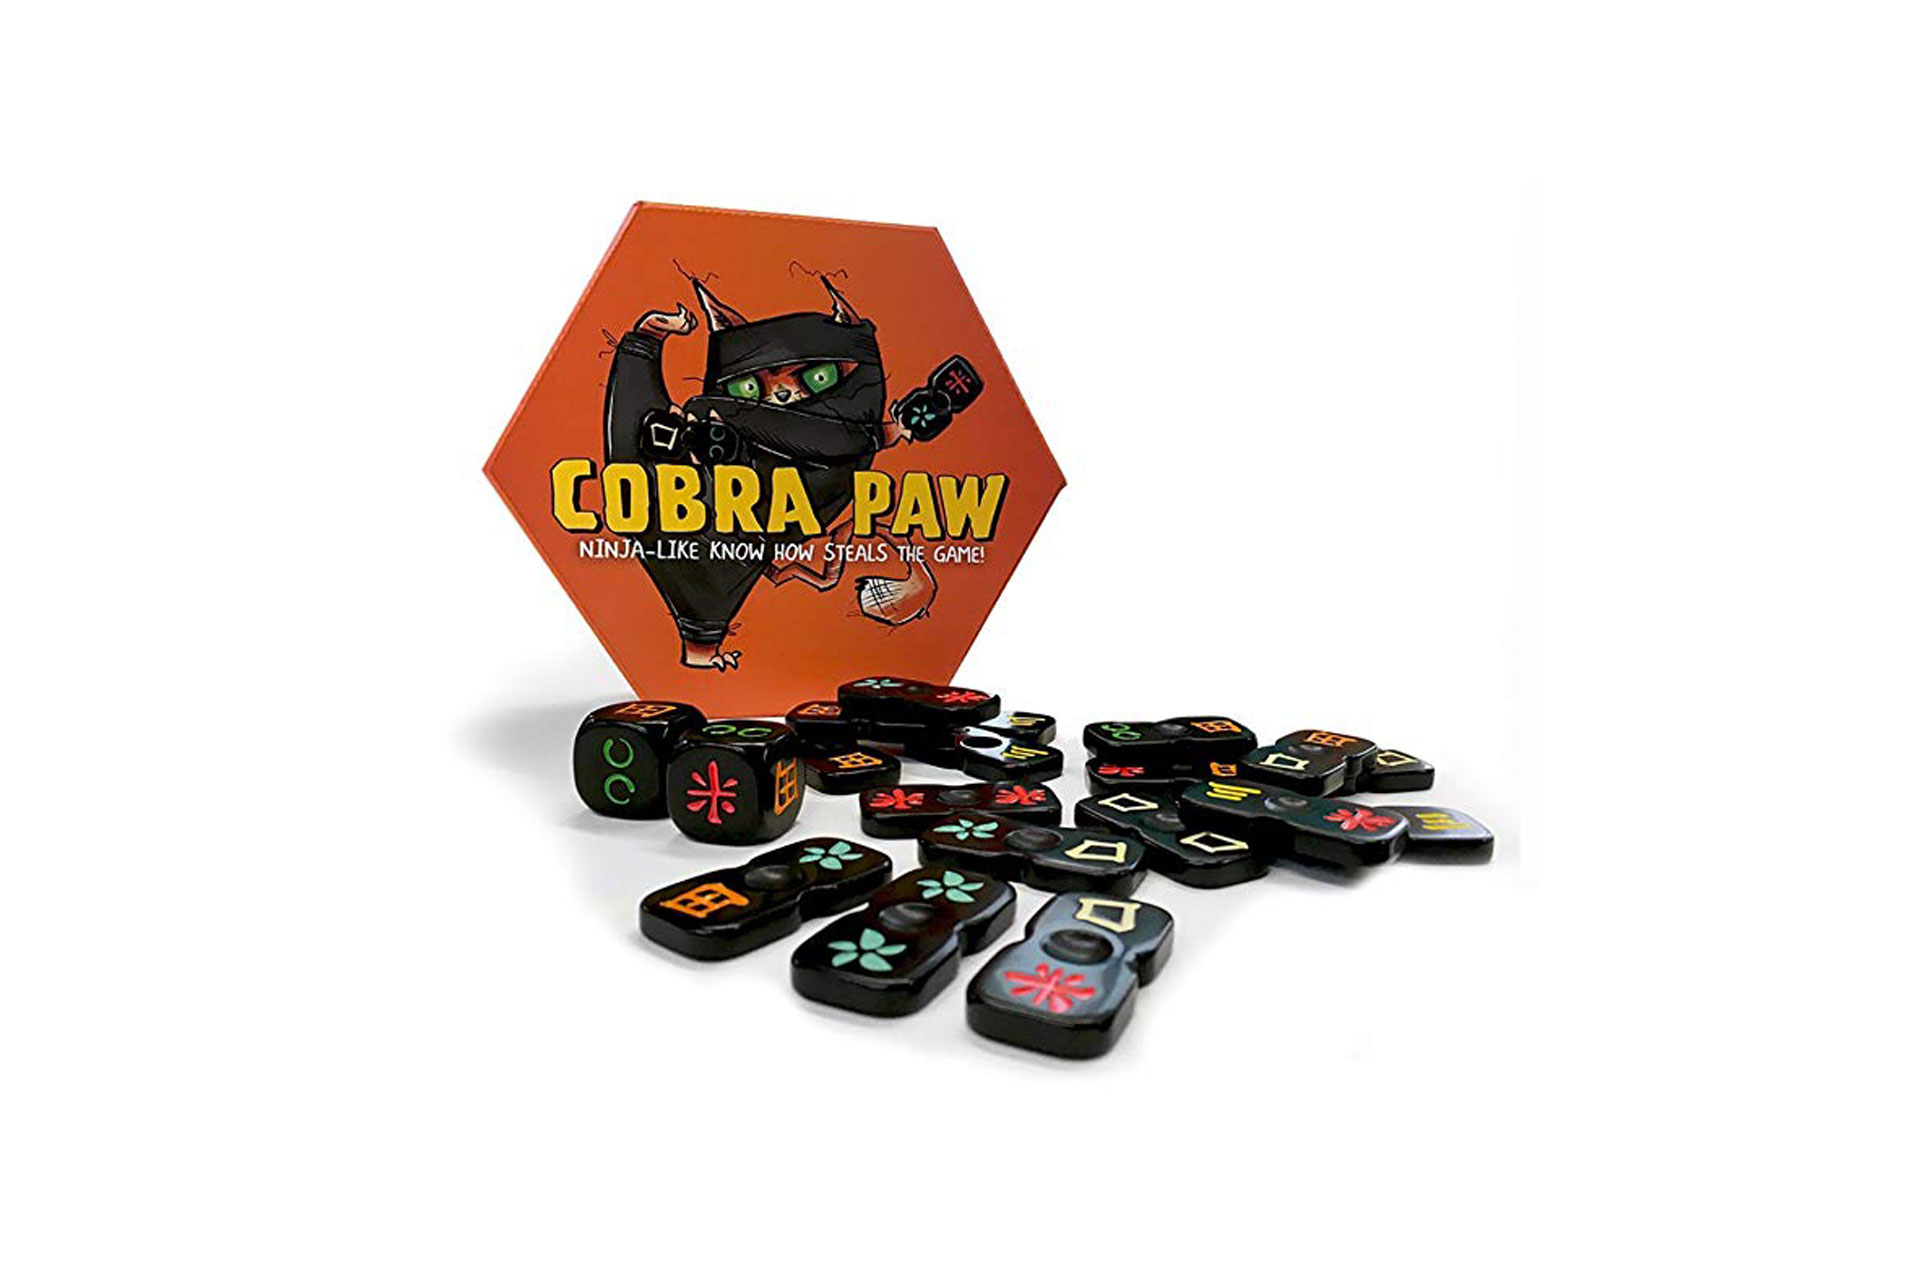 Cobra Paw Travel Game; Courtesy of Amazon